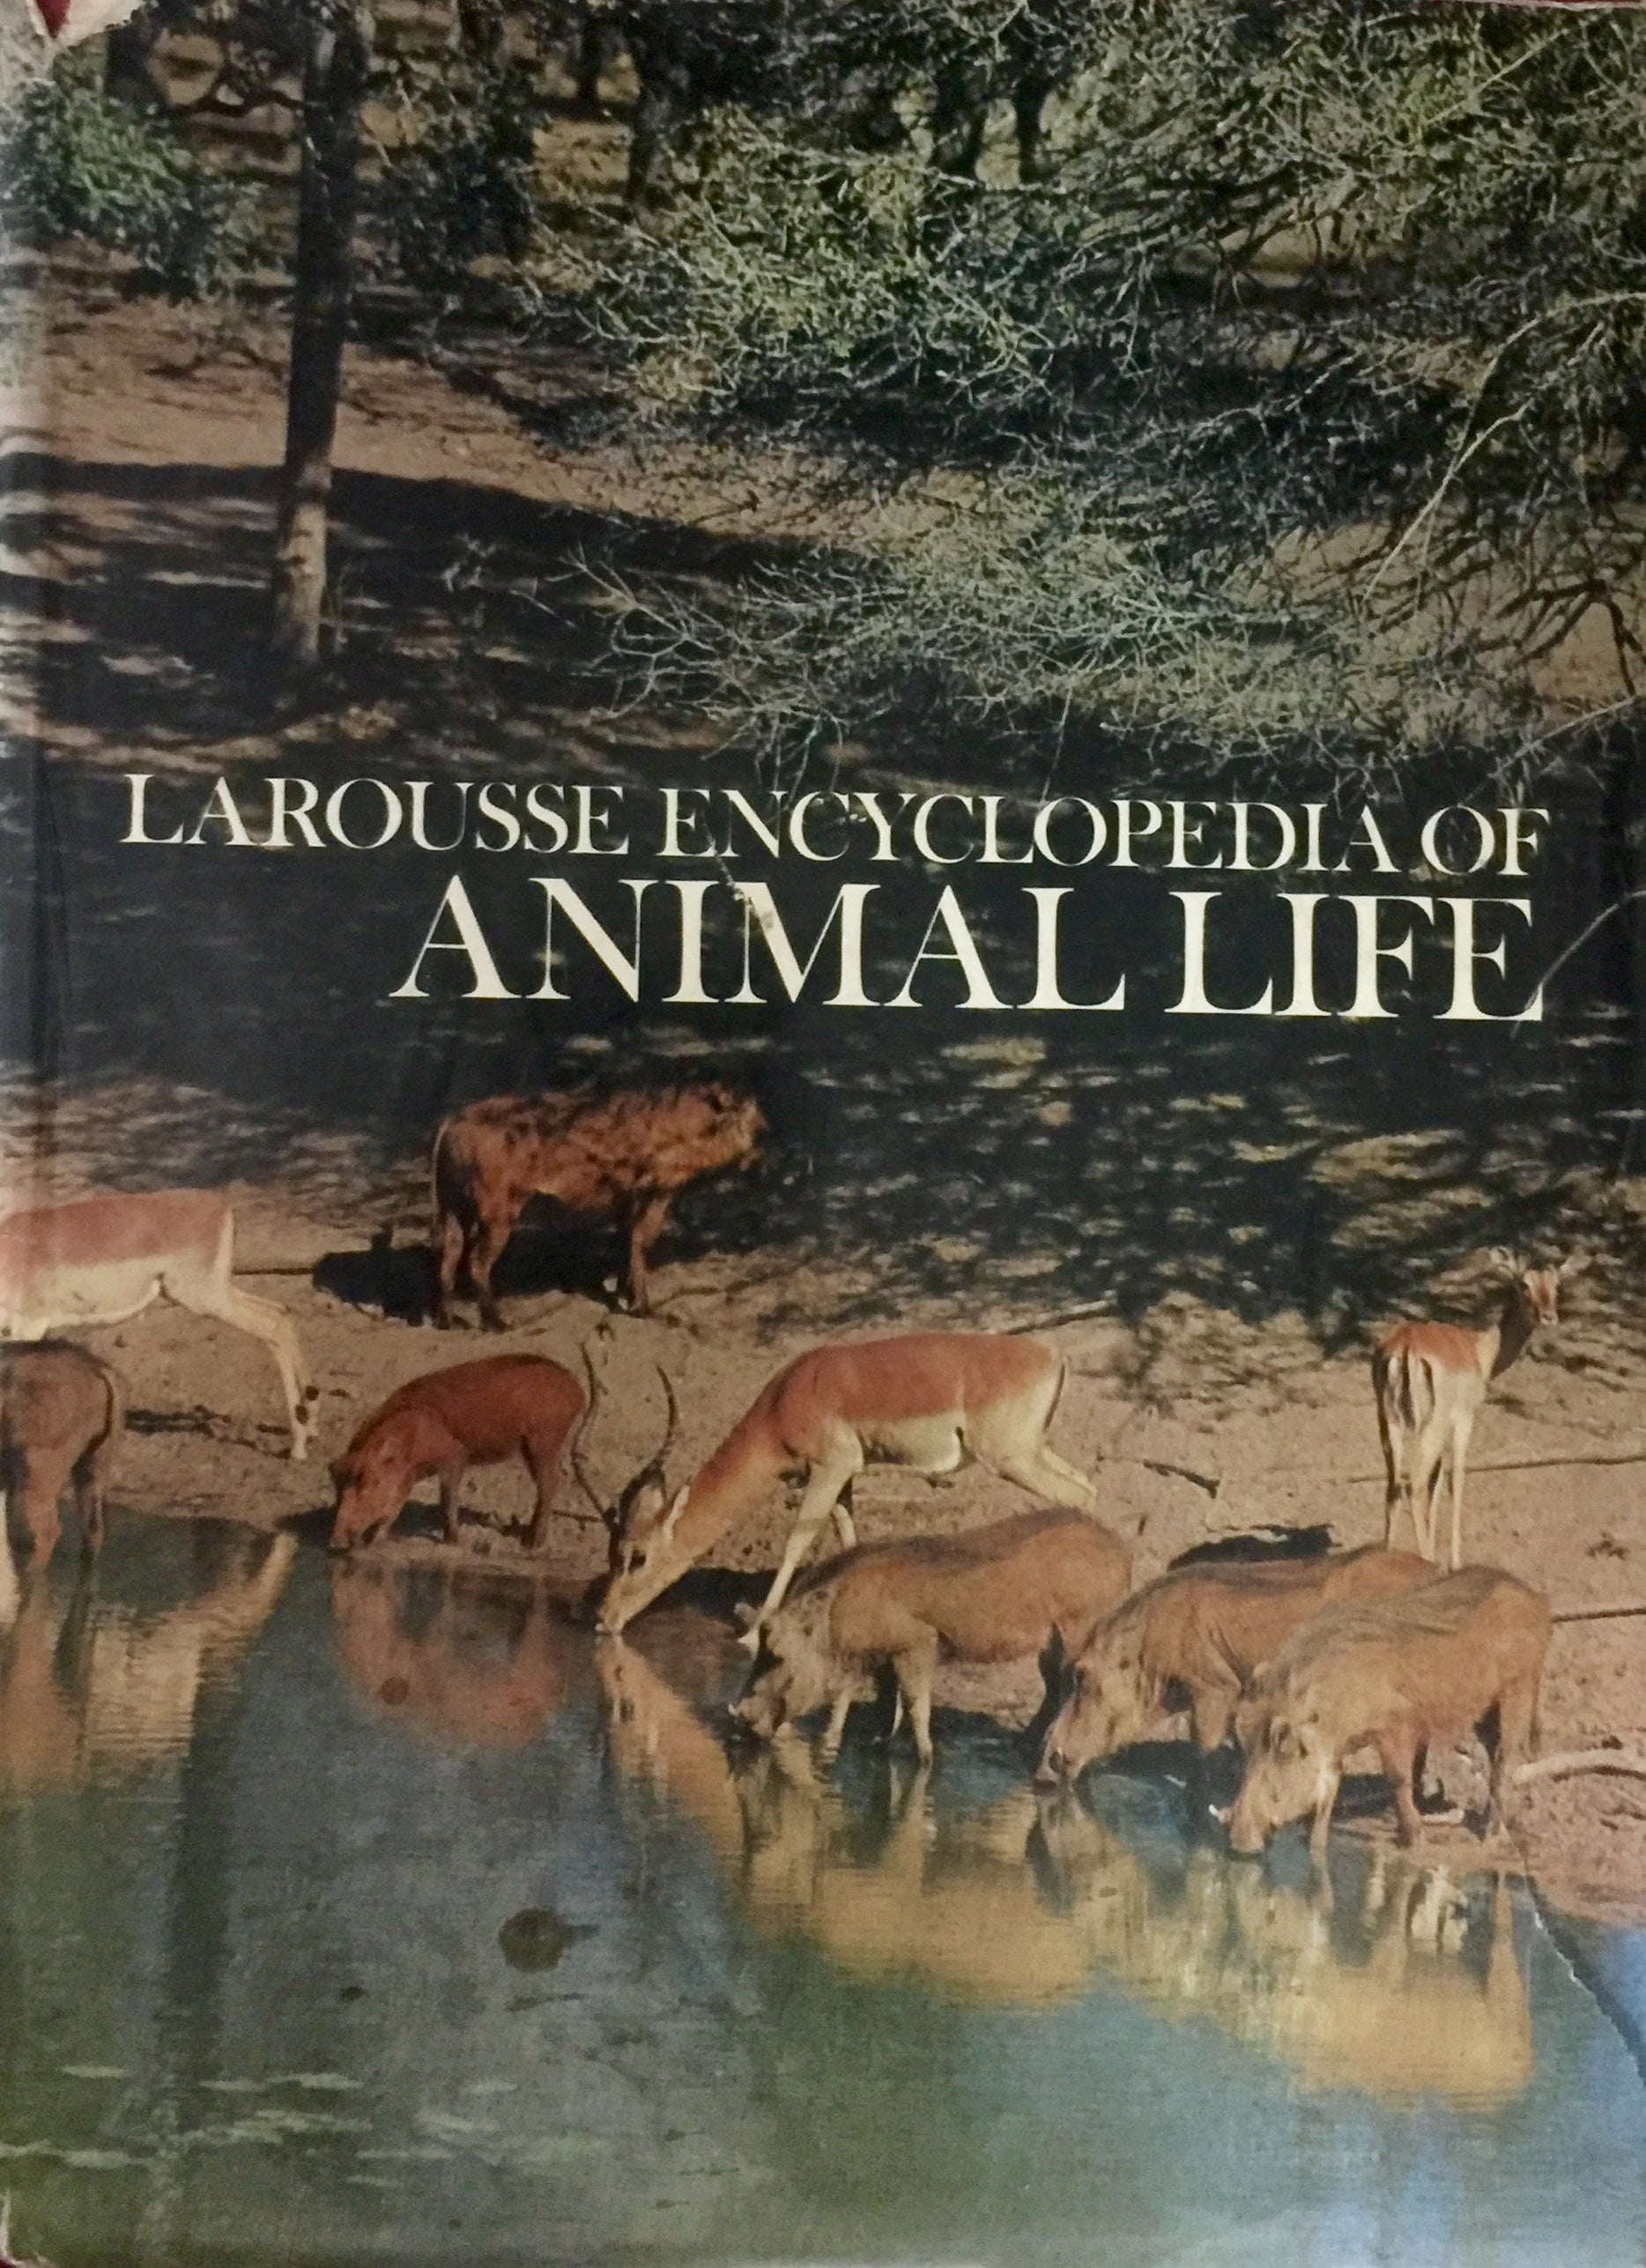 Larousse Encyclopedia of Animal Life by Paul Hamlyn (1973)  Half Price Books India Books inspire-bookspace.myshopify.com Half Price Books India